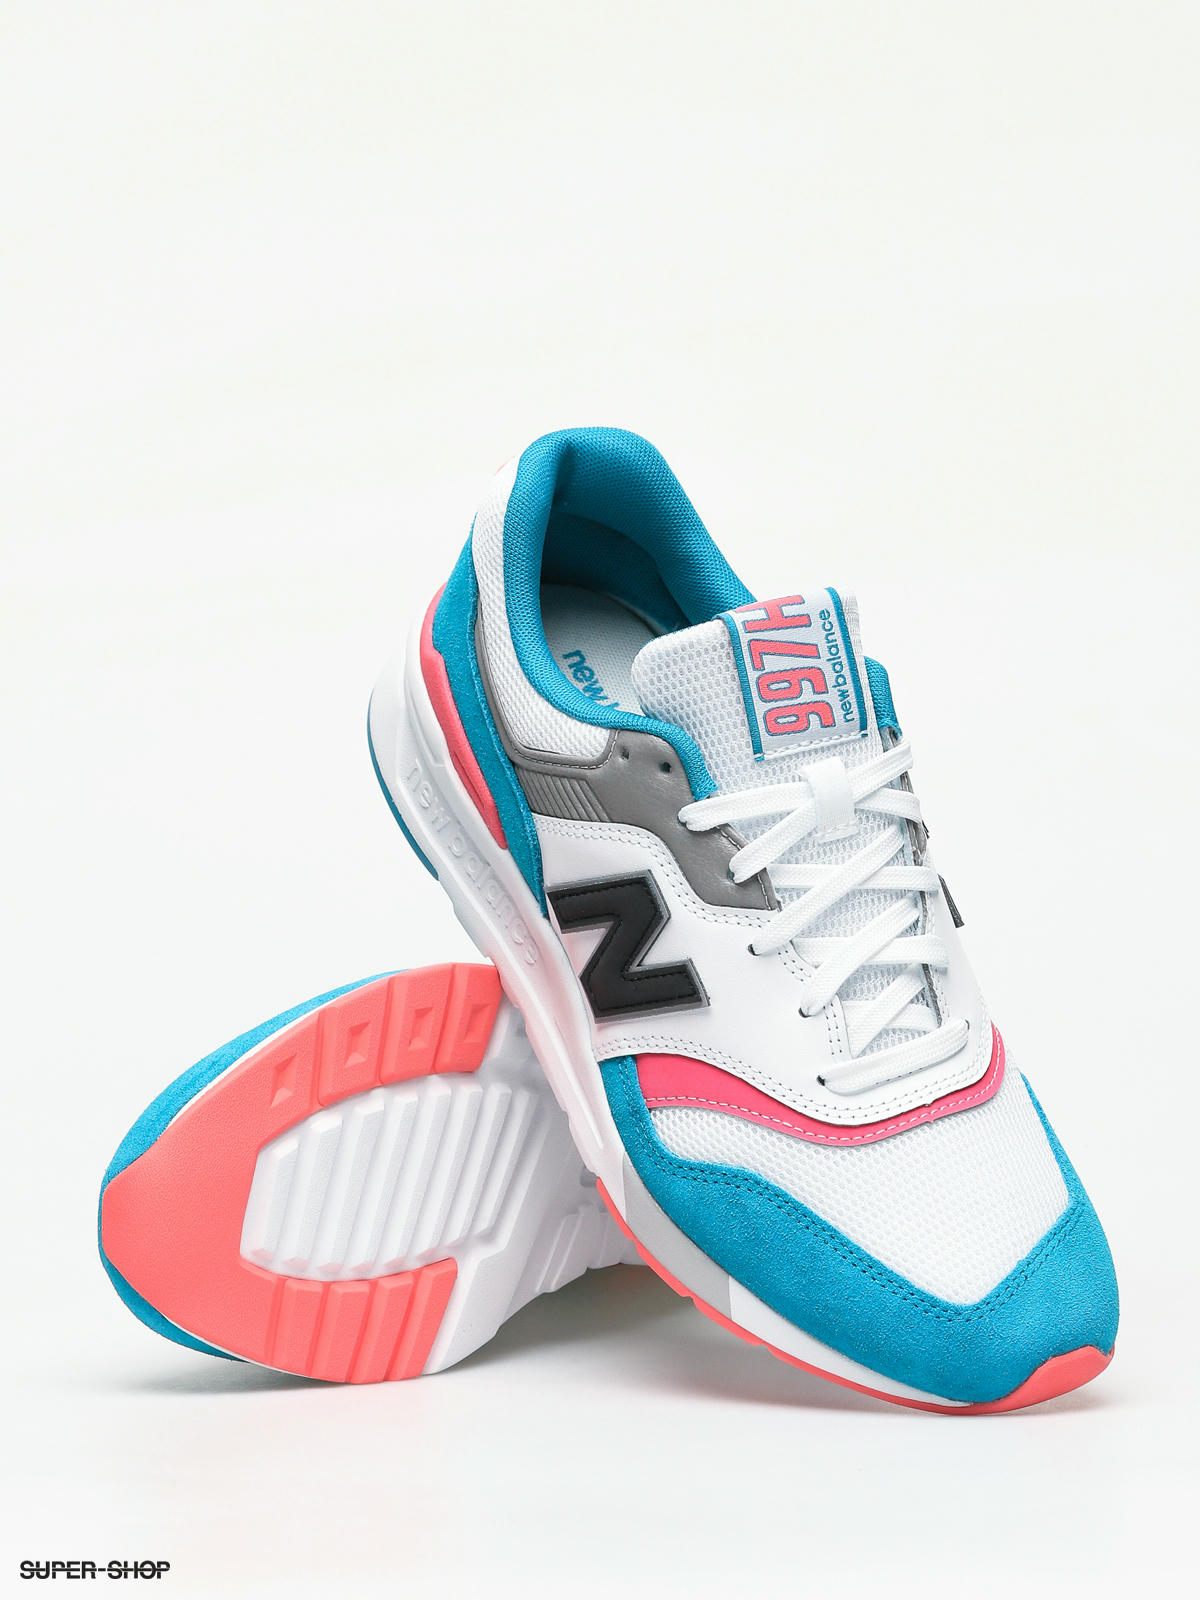 New Balance 997 Shoes (deep ozone blue)